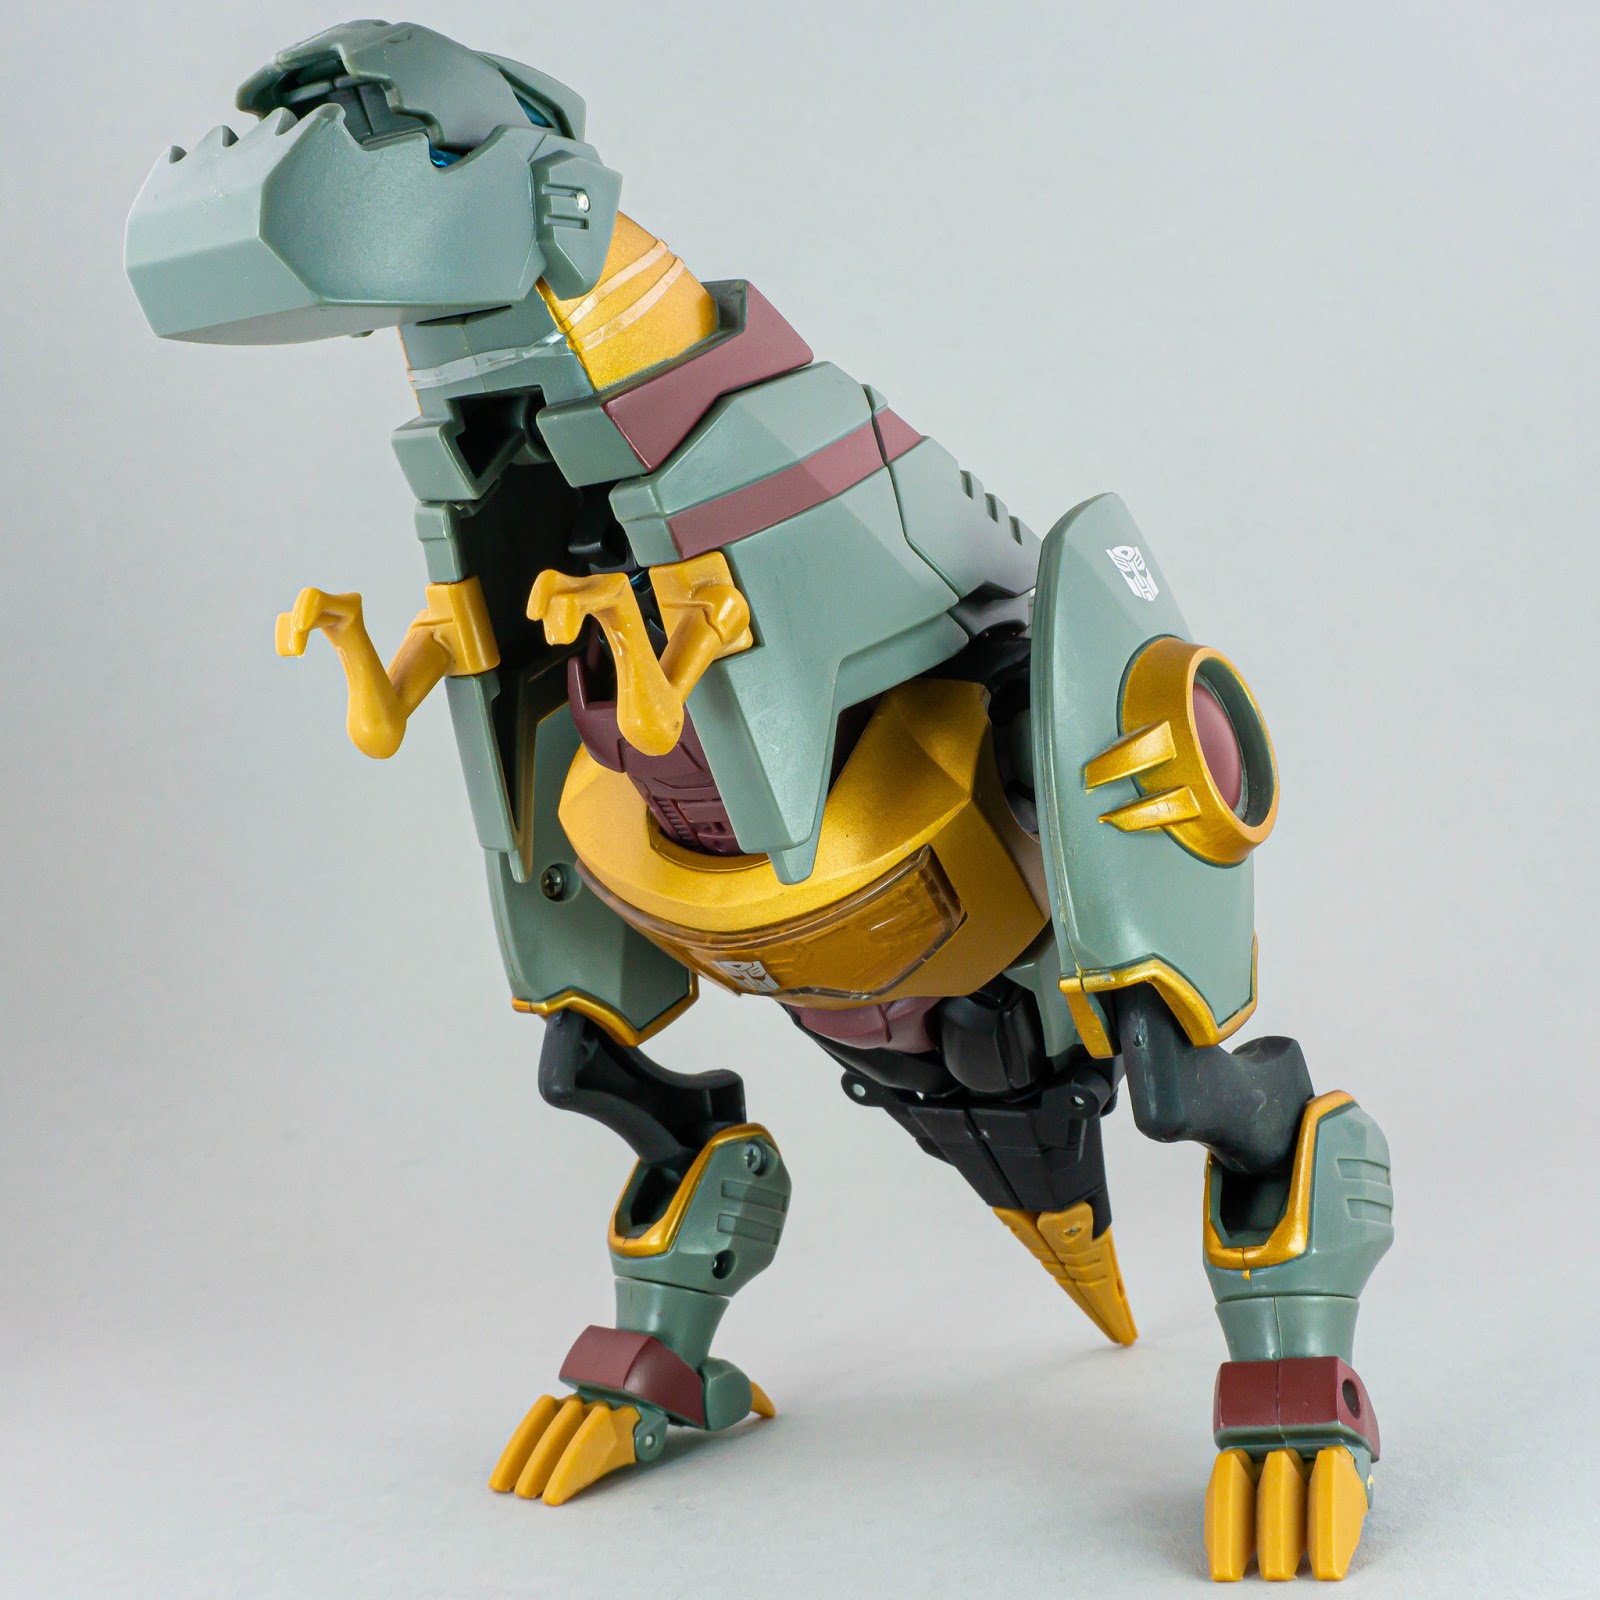 Transformers Animated Grimlock Tyrannosaurus Rex mode posed